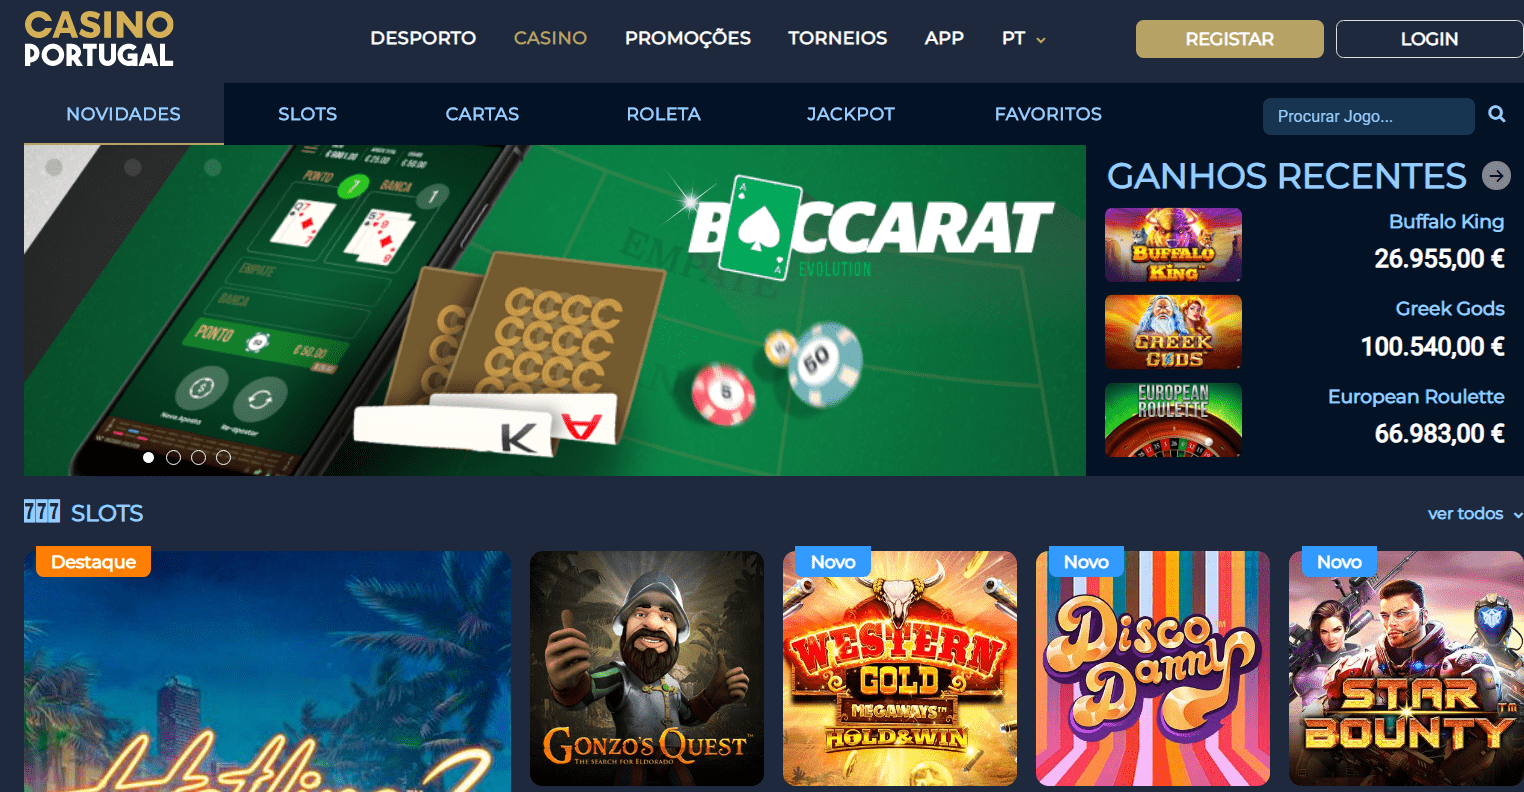 Casino Portugal online